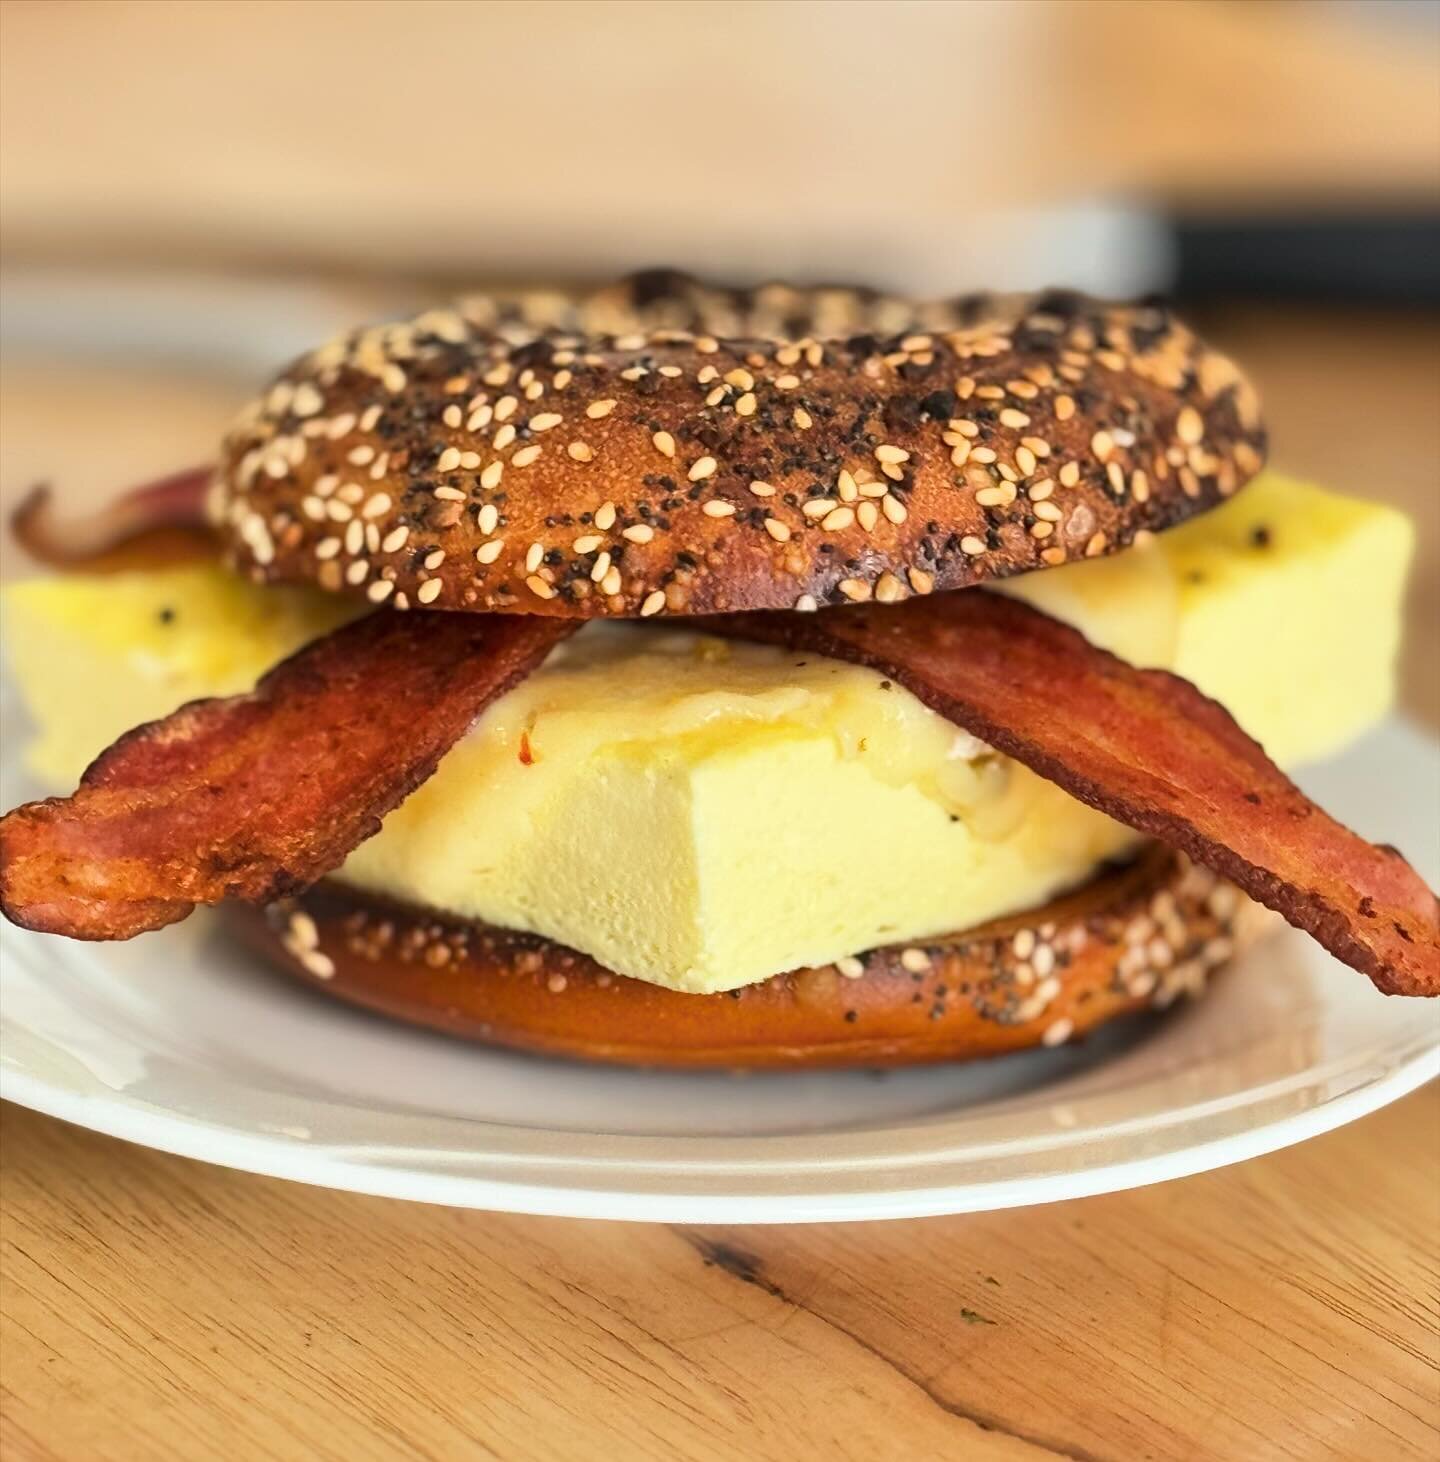 Brekkie Bagel Sandwich. #sundayvibes 
.
.
#breakfastbagel #bagellover #bfast #sundayfood #foodie #foodiesofinstagram #igfoodies #foodstagram #bagelporn #yum #foodreview #chicagofoodie #chefs #baconlovers #bacon #foodbeast #foodblog